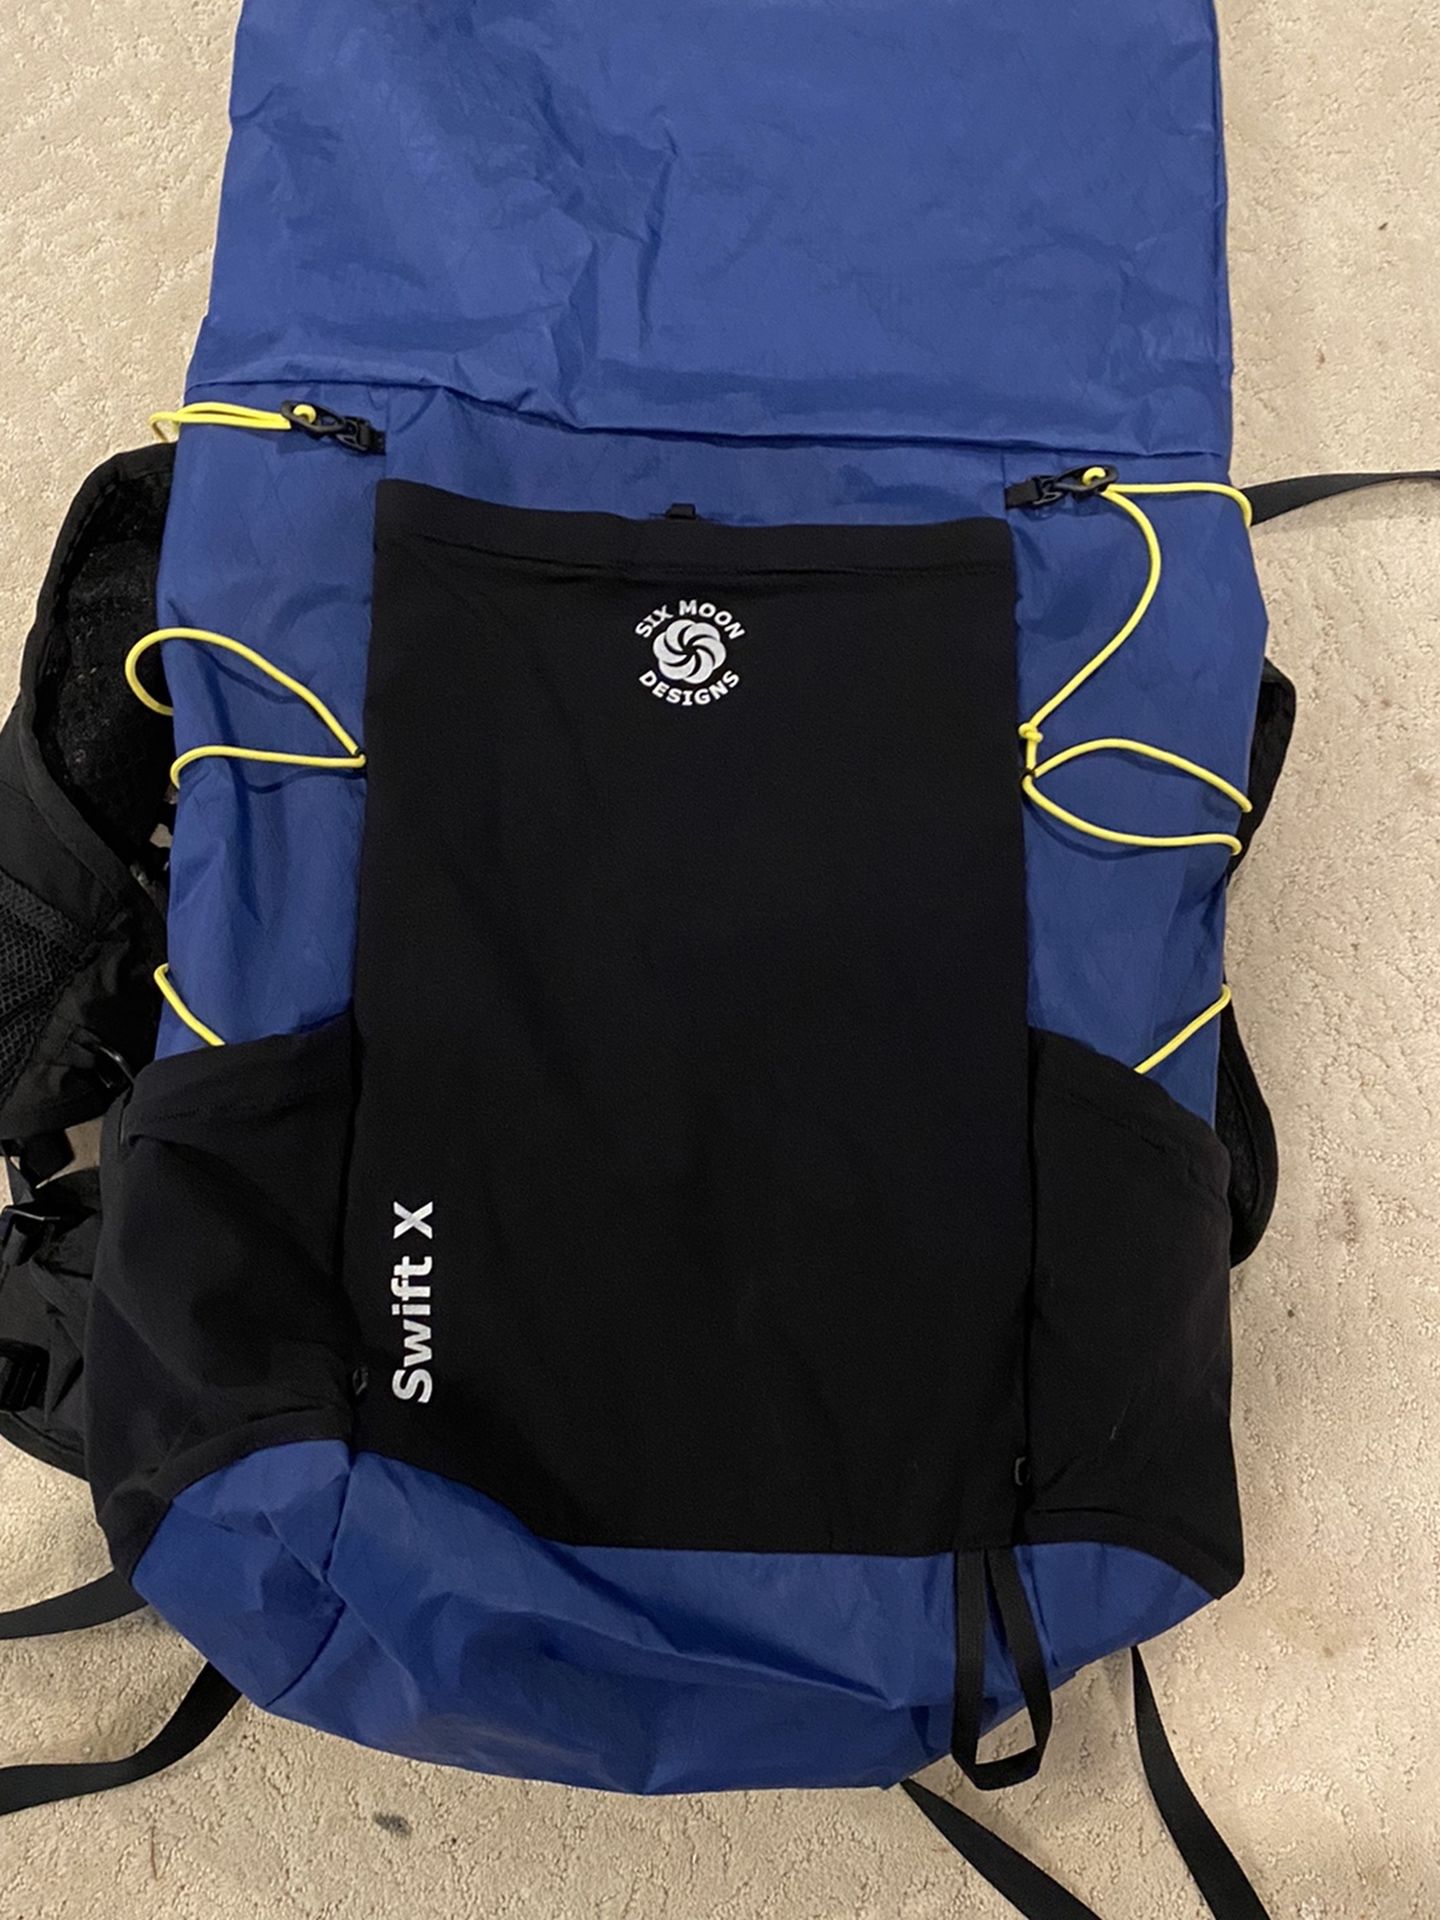 Six moons Ultralight Backpack